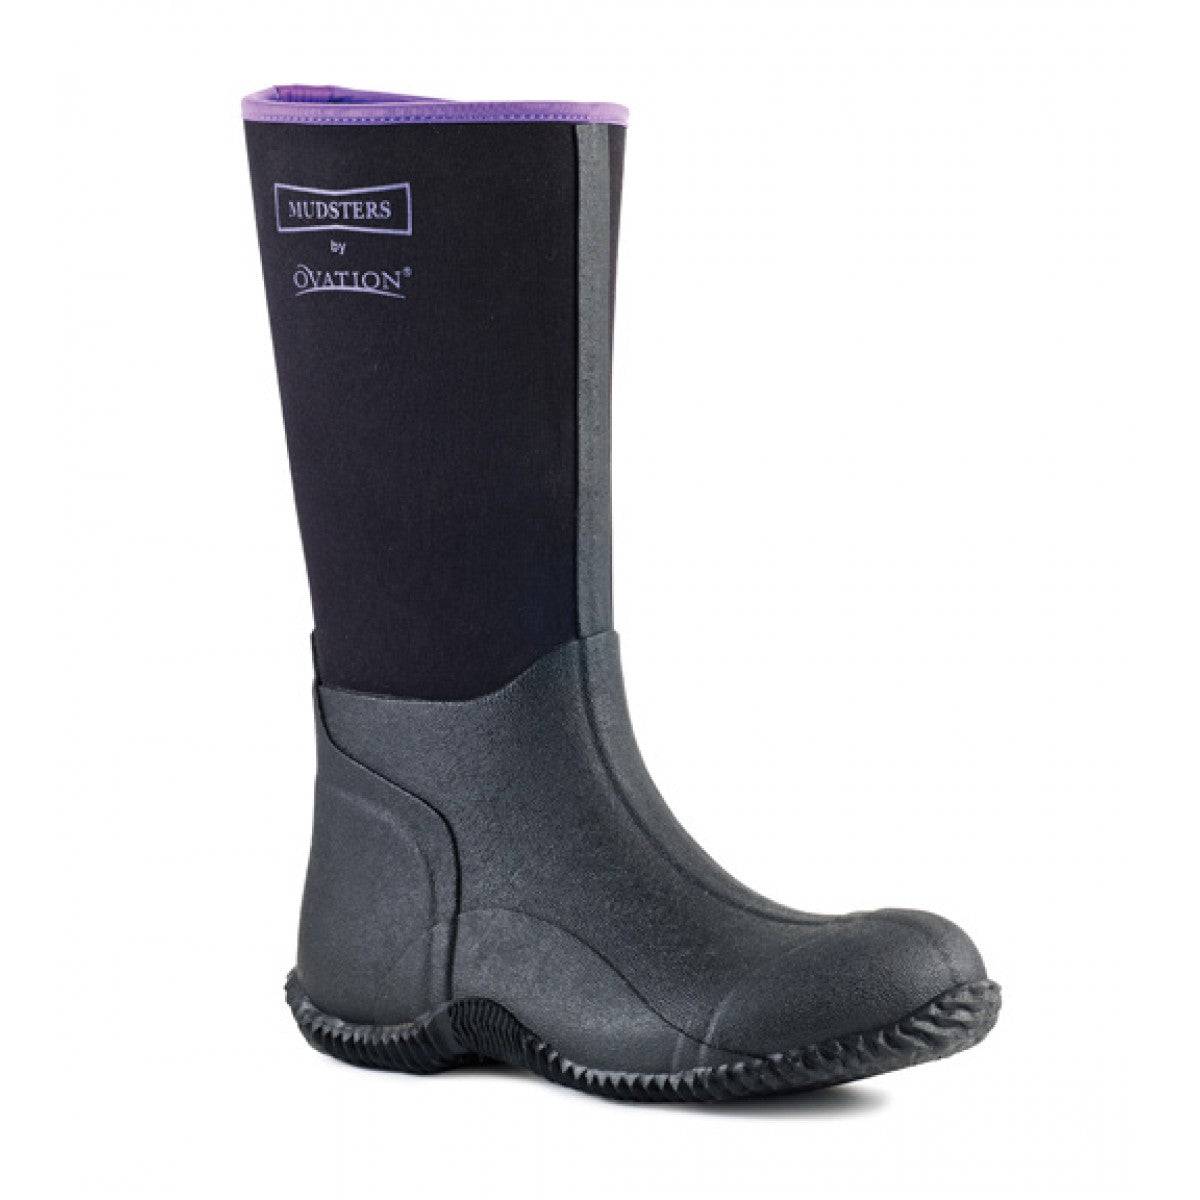 Ovation® Mudster Tall Barn Boot